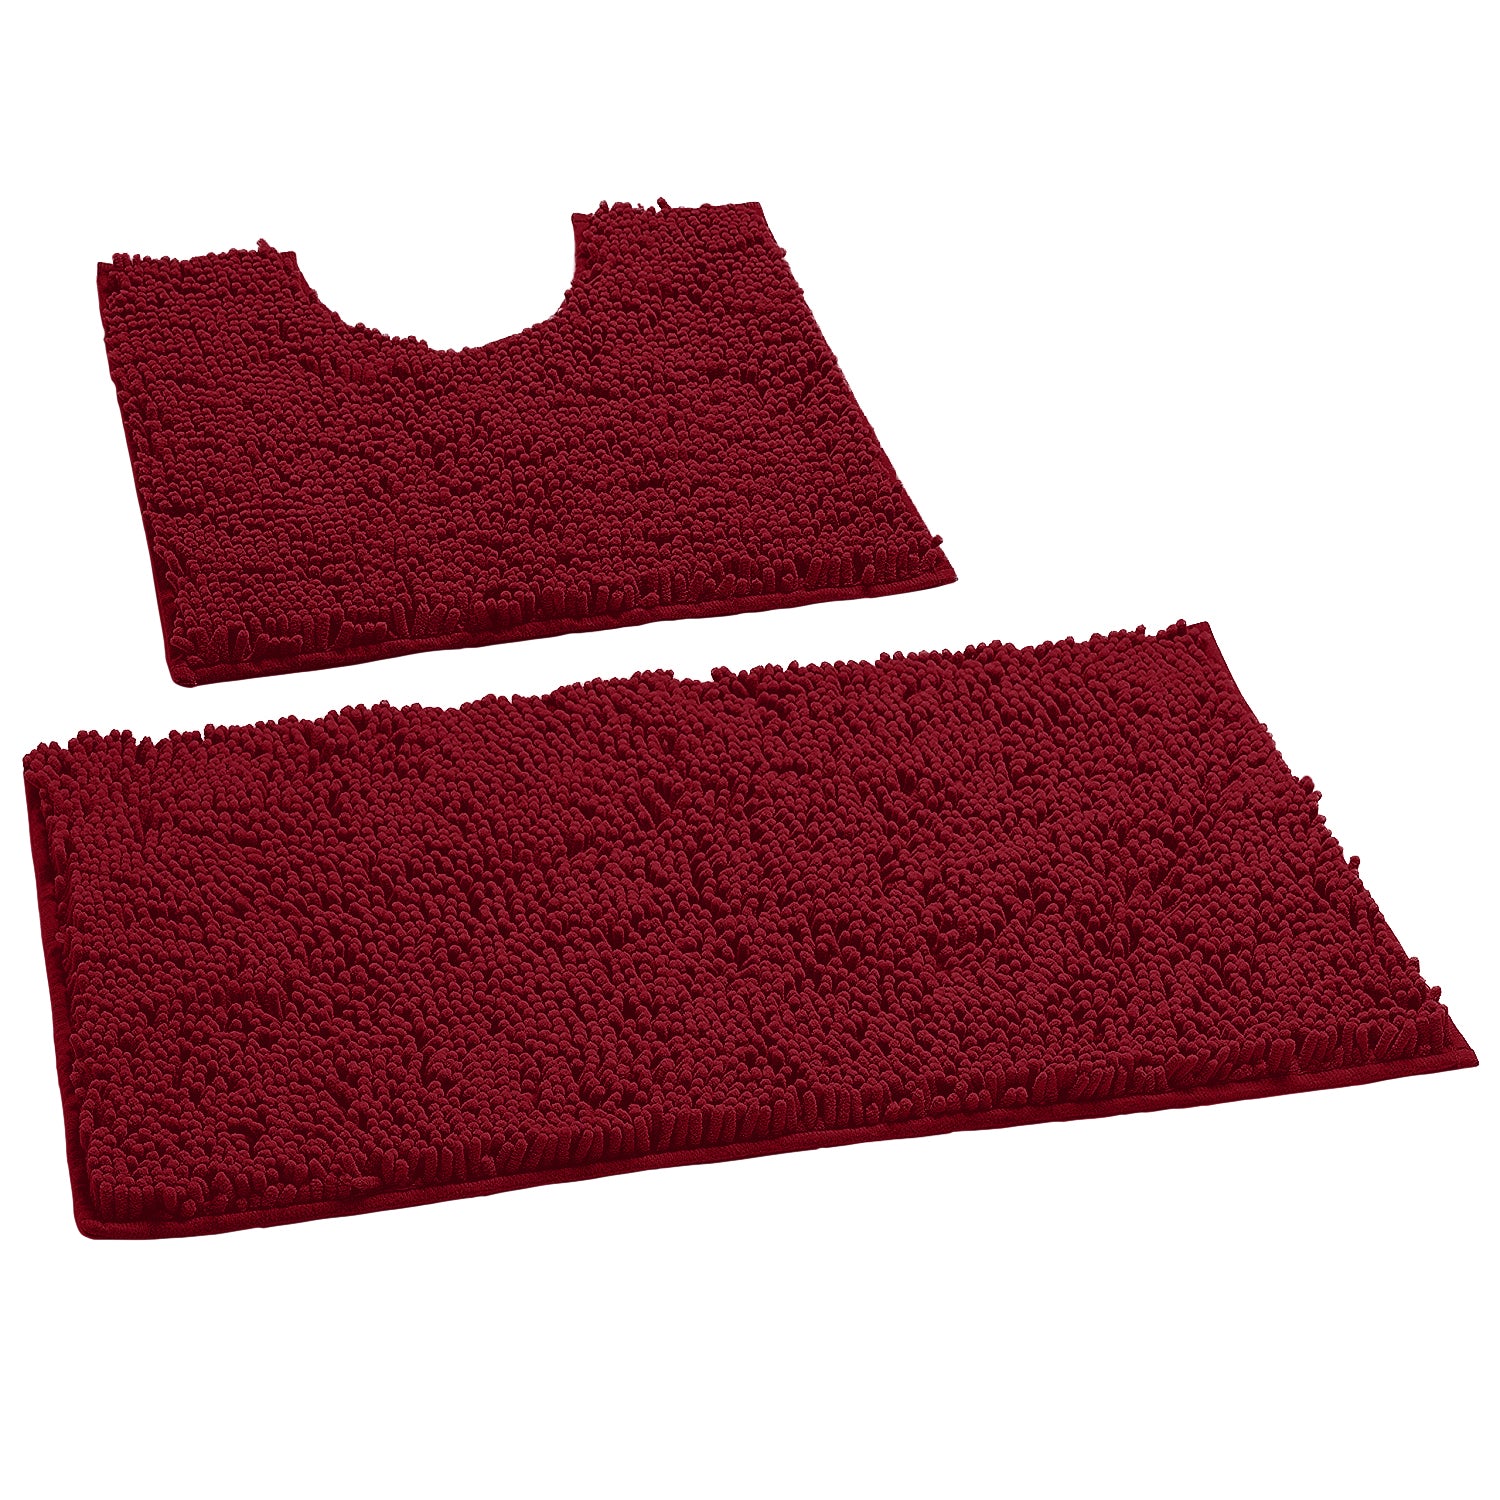 LuxUrux Red Bathroom Rugs Set-Extra-Soft Plush Bath Mat Shower Bathroom Rugs,1'' Chenille Microfiber Material, Super Absorbent (Rectangular Set, Red)